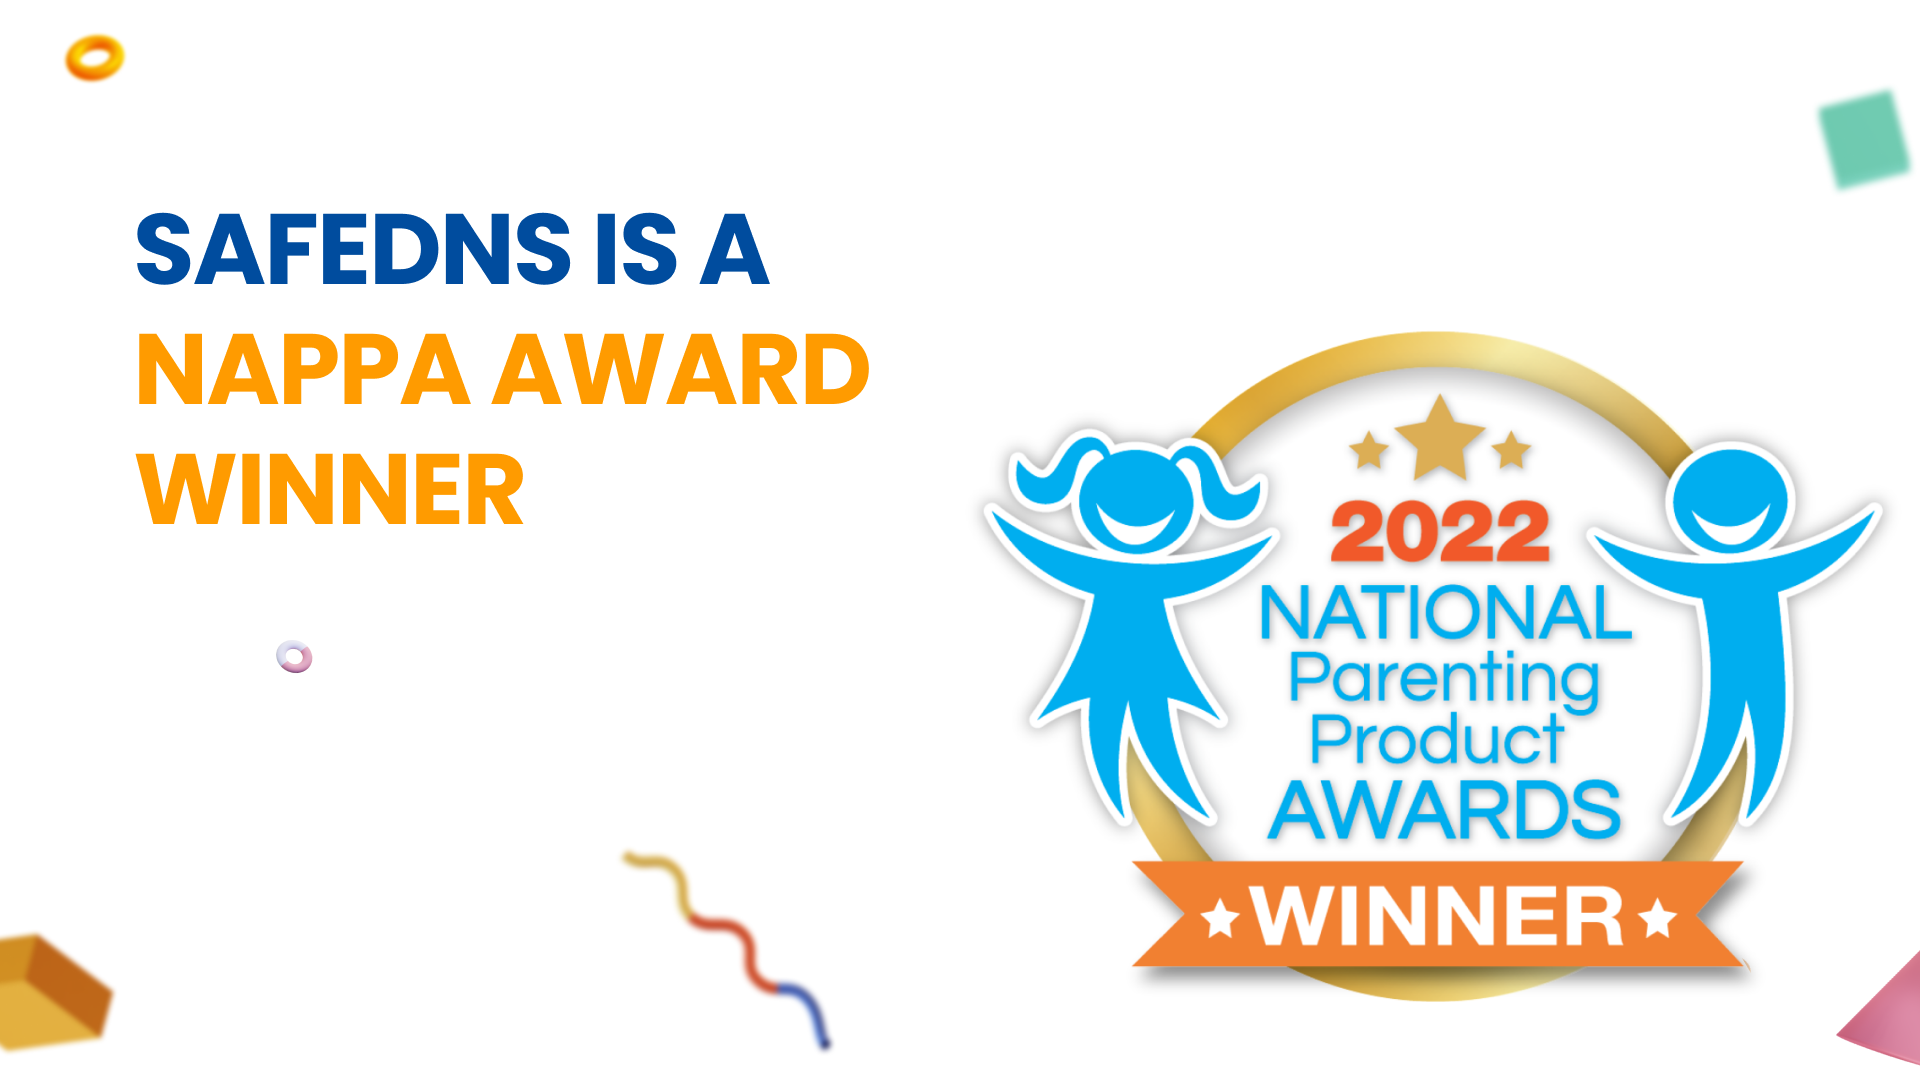 SafeDNS is a NAPPA Award winner